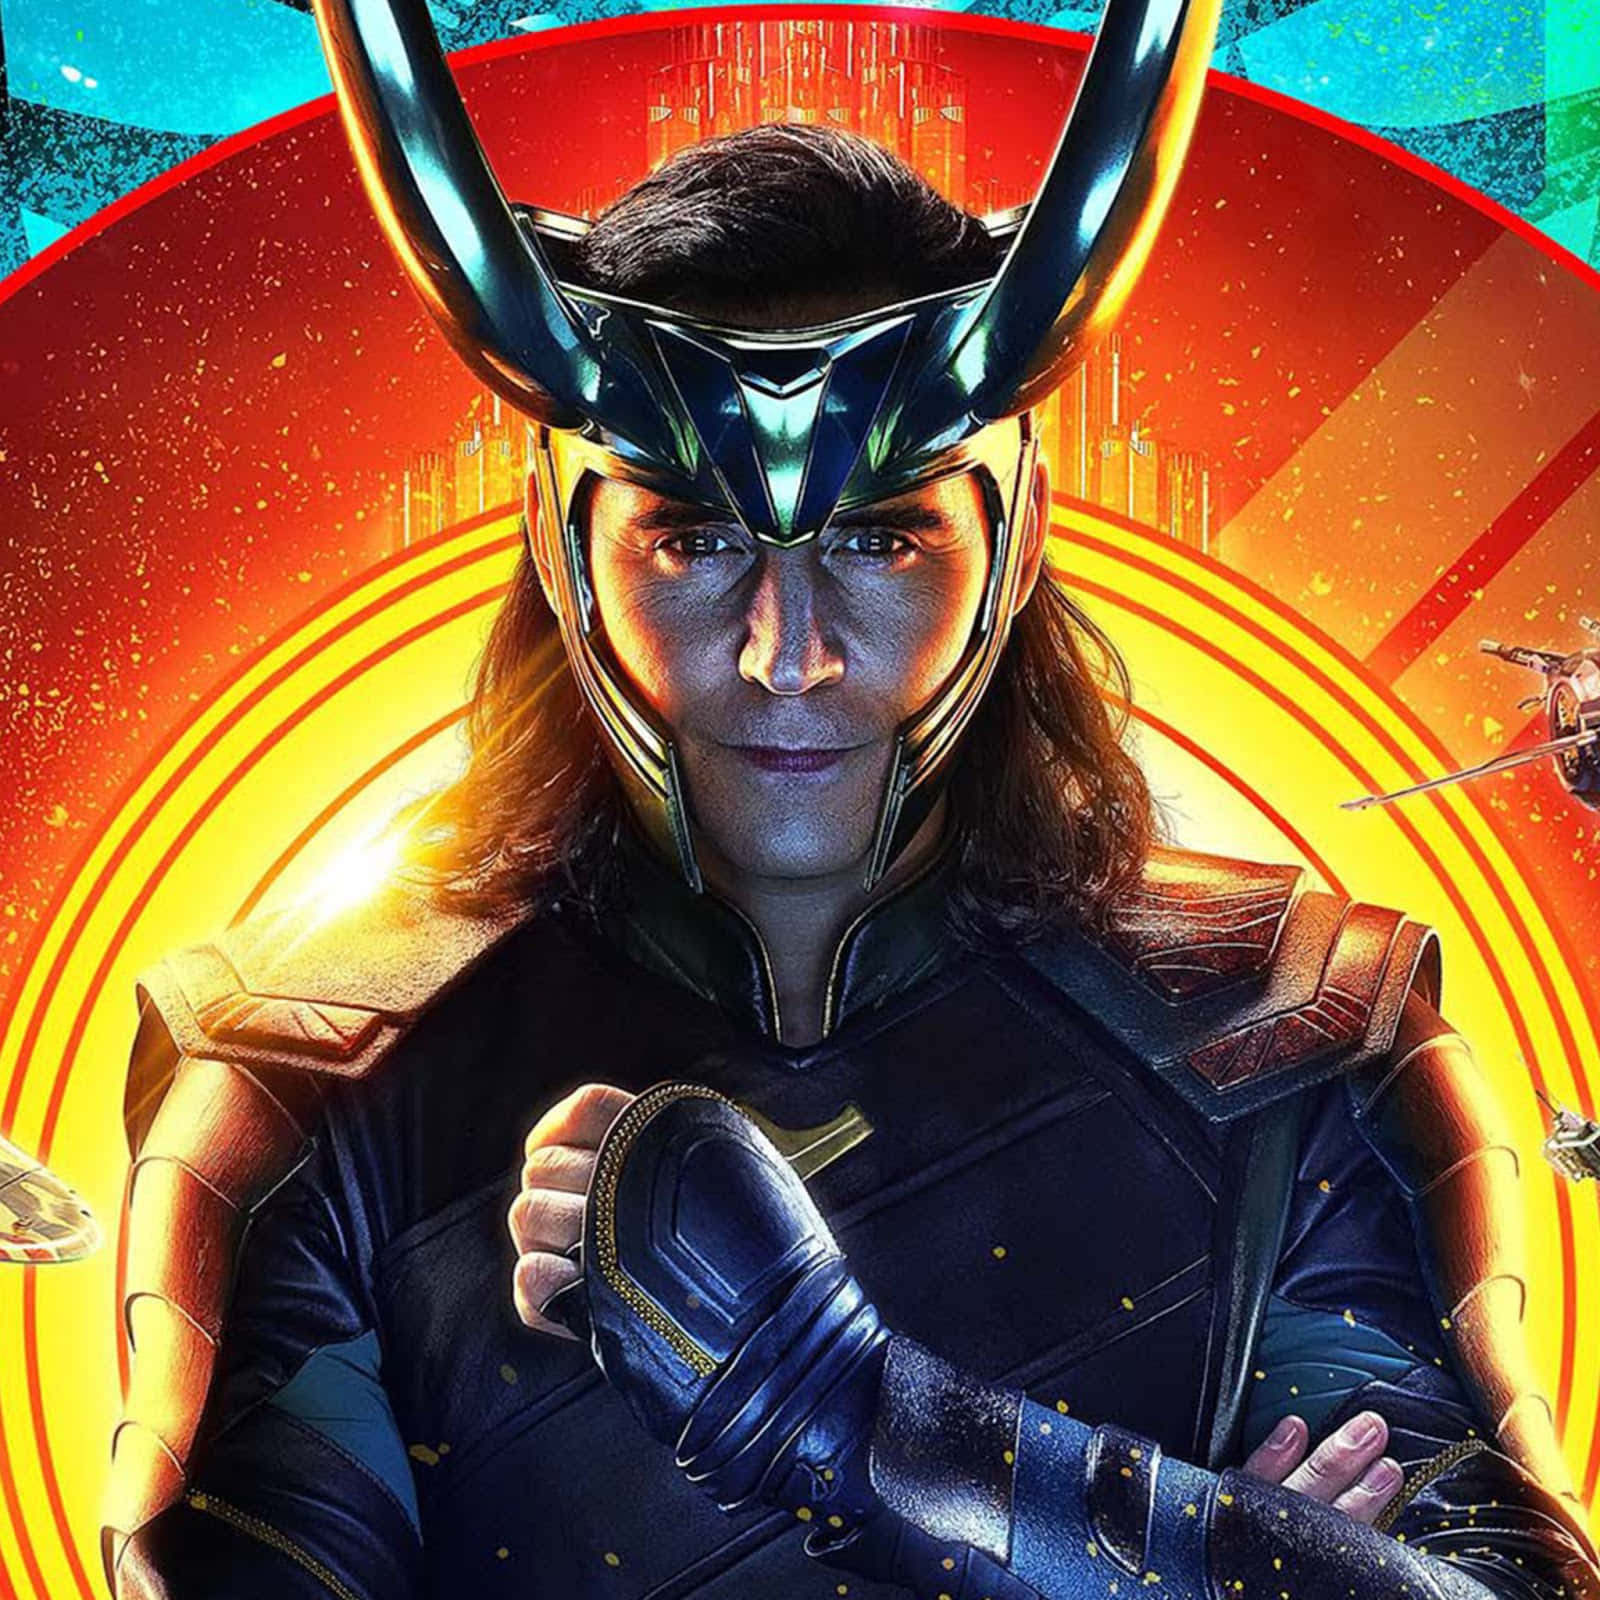 Loki, The God of Mischief and Trickery